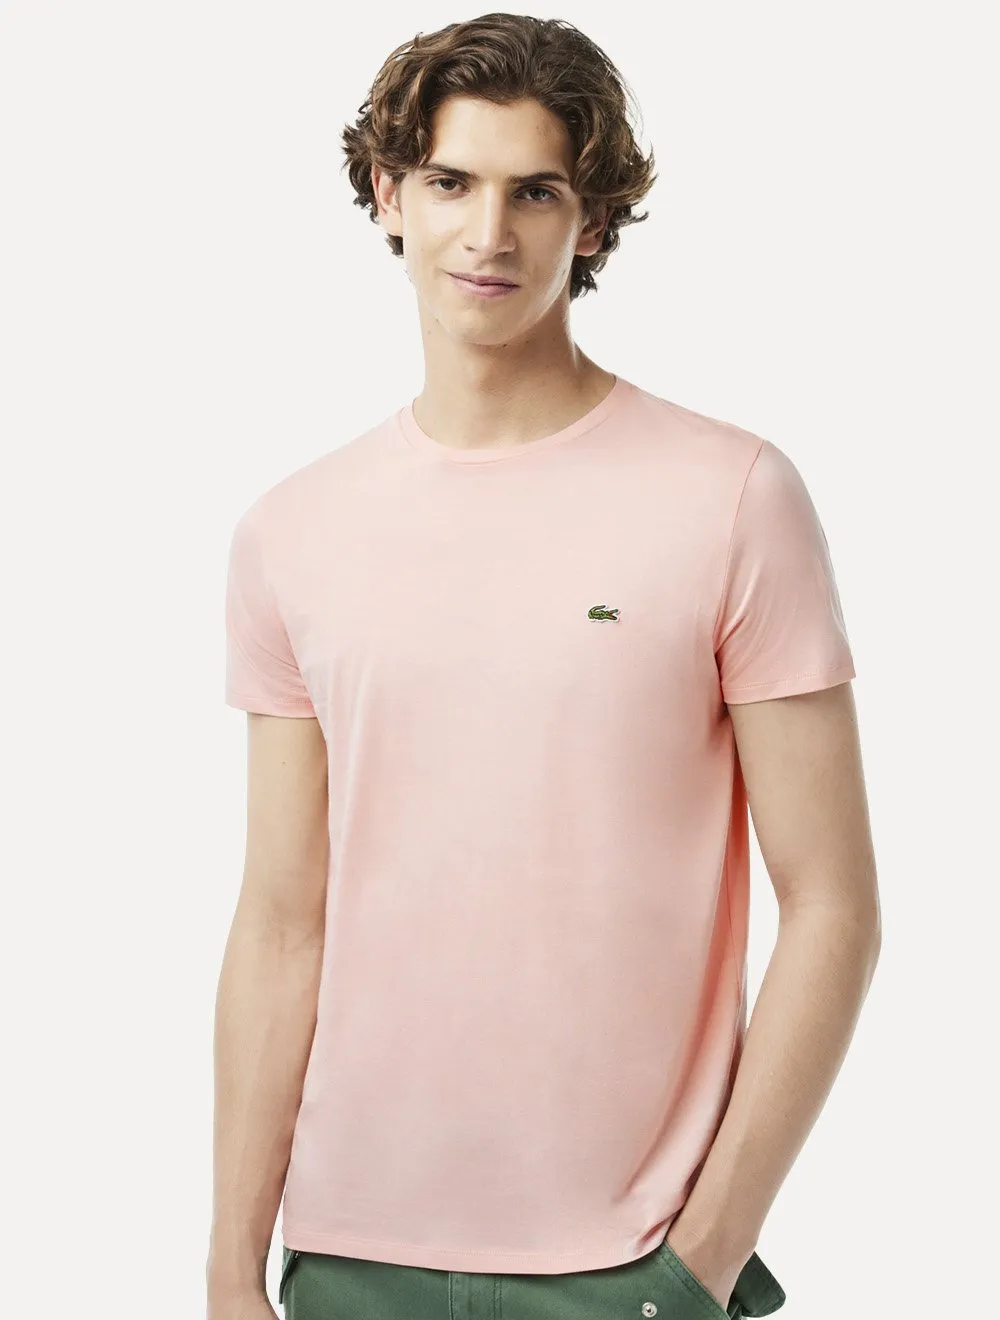 Camiseta Lacoste Masculina Jersey Pima Cotton Peach Rosa